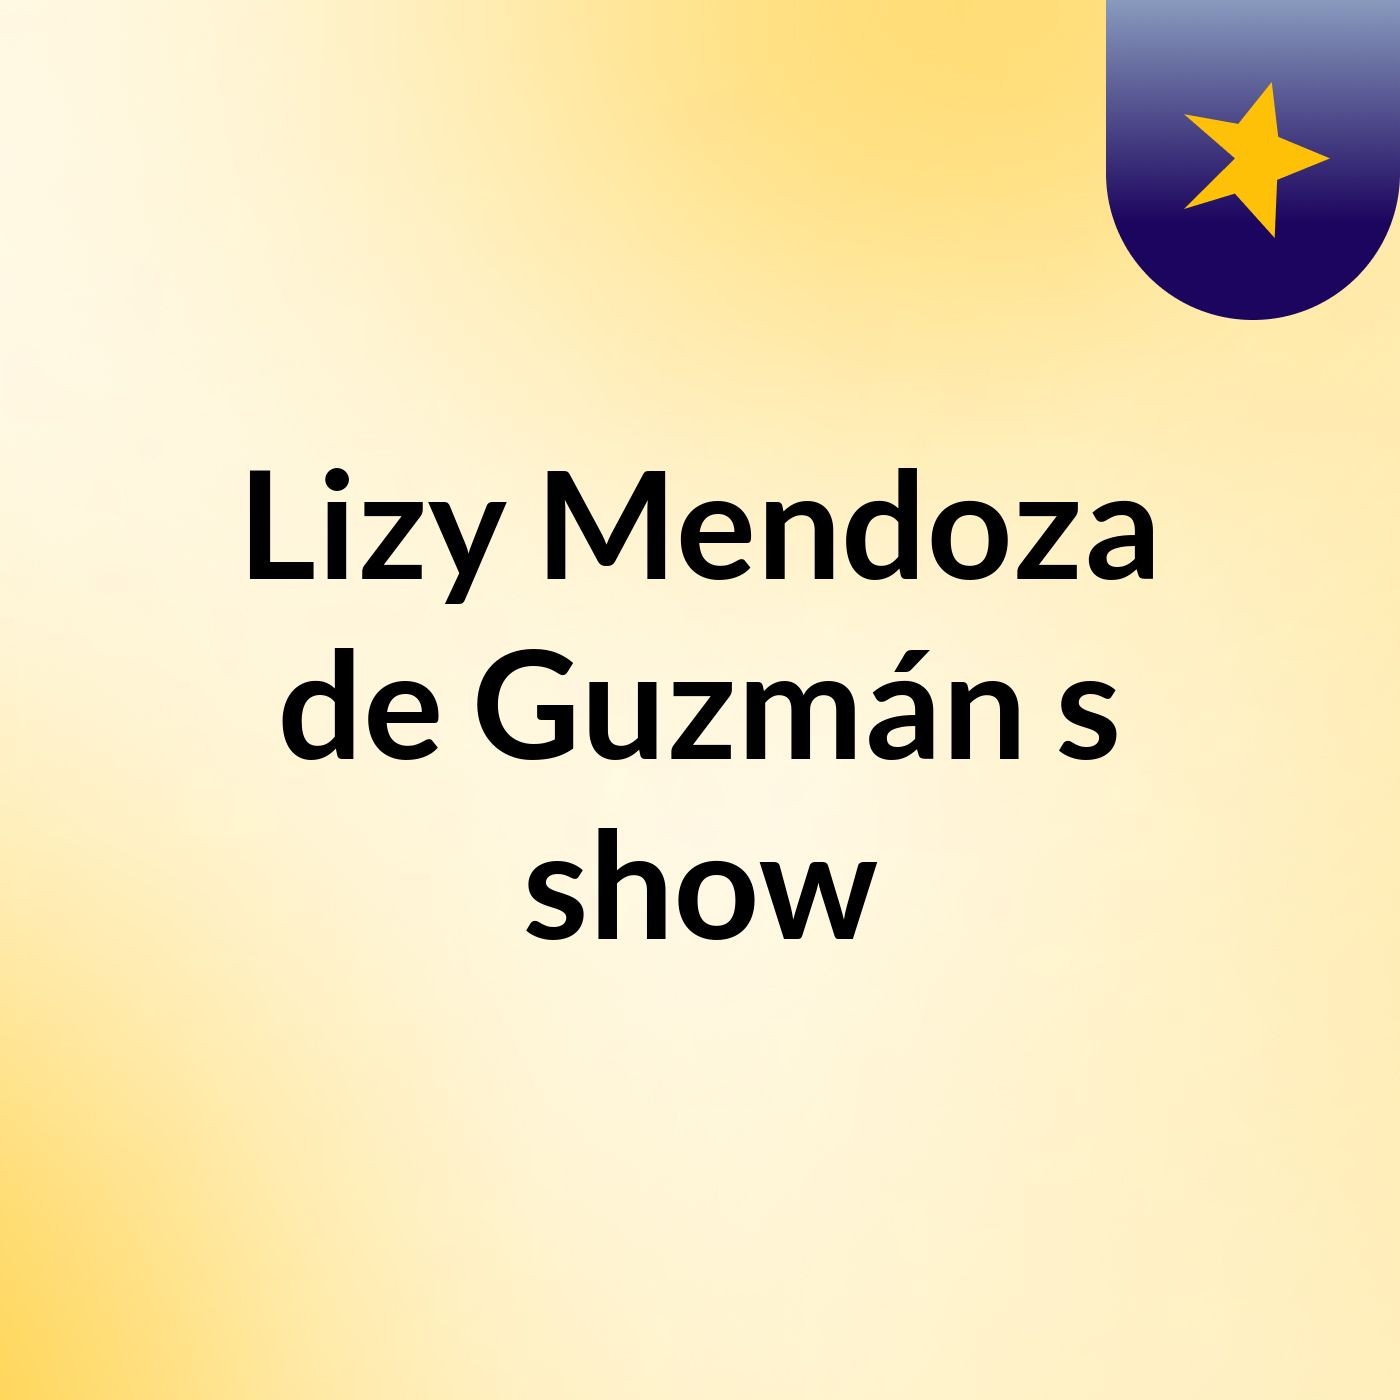 Lizy Mendoza de Guzmán's show